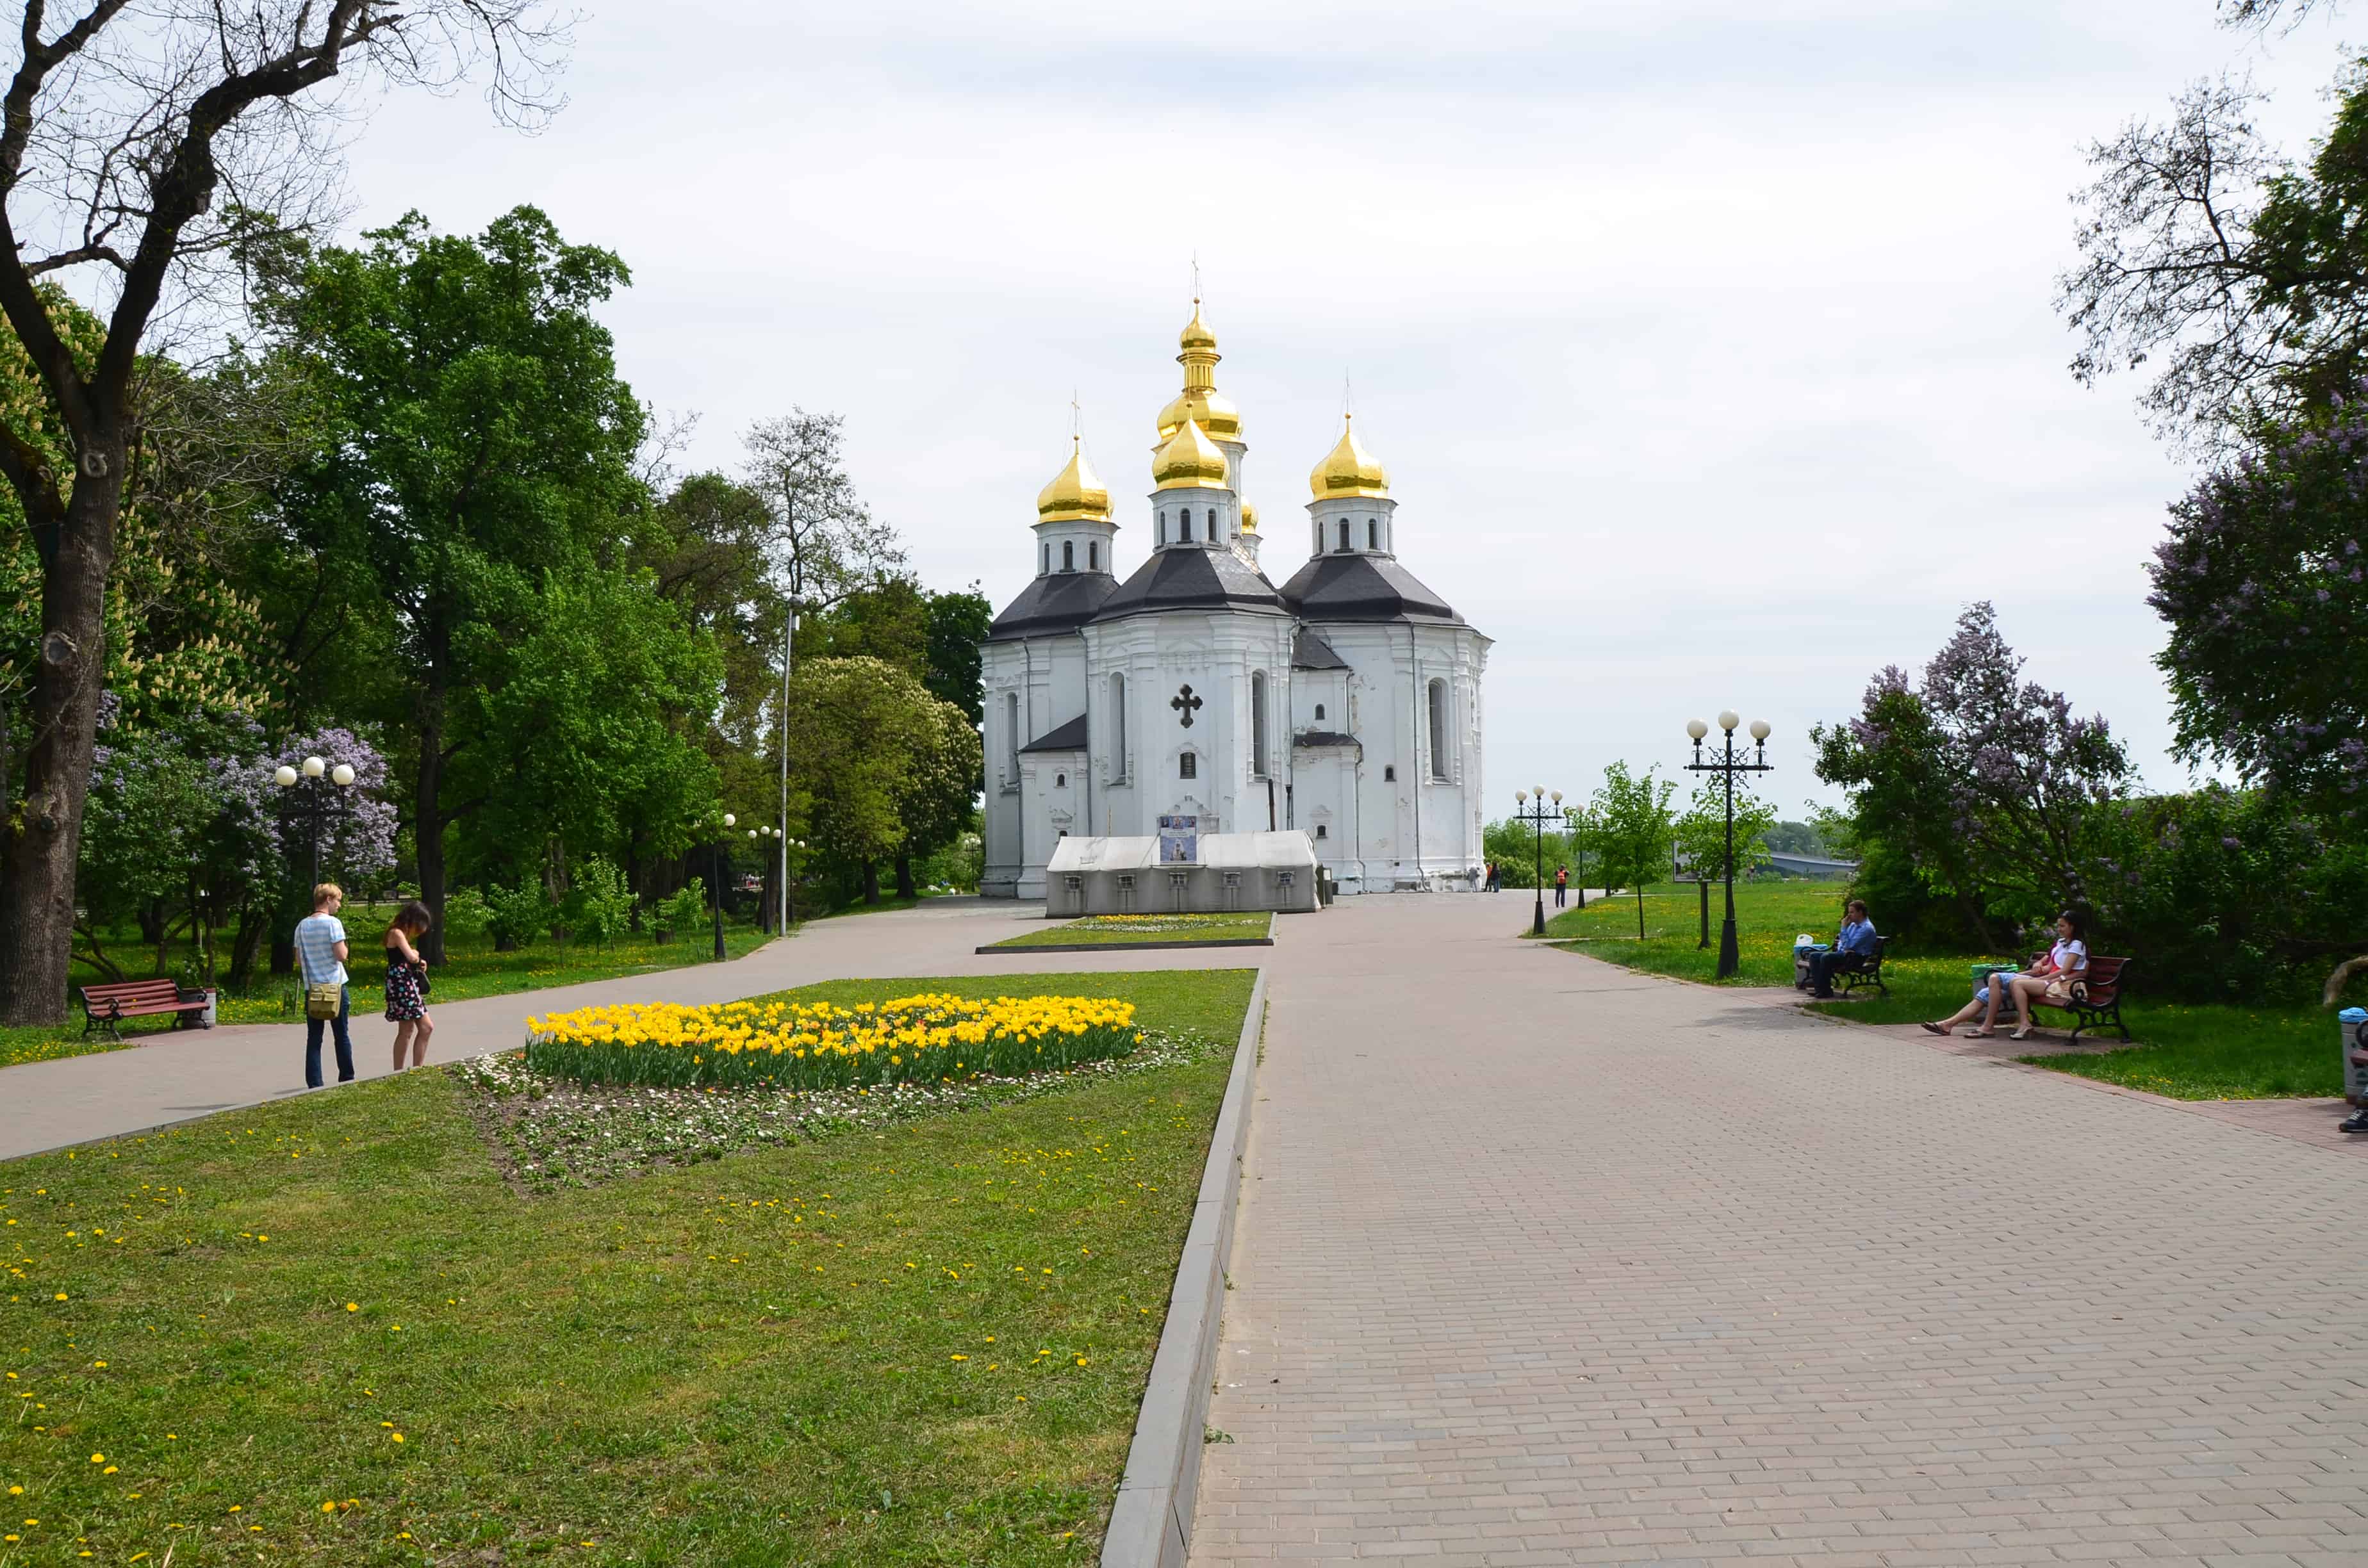 St. Catherine's Church in Chernihiv, Ukraine